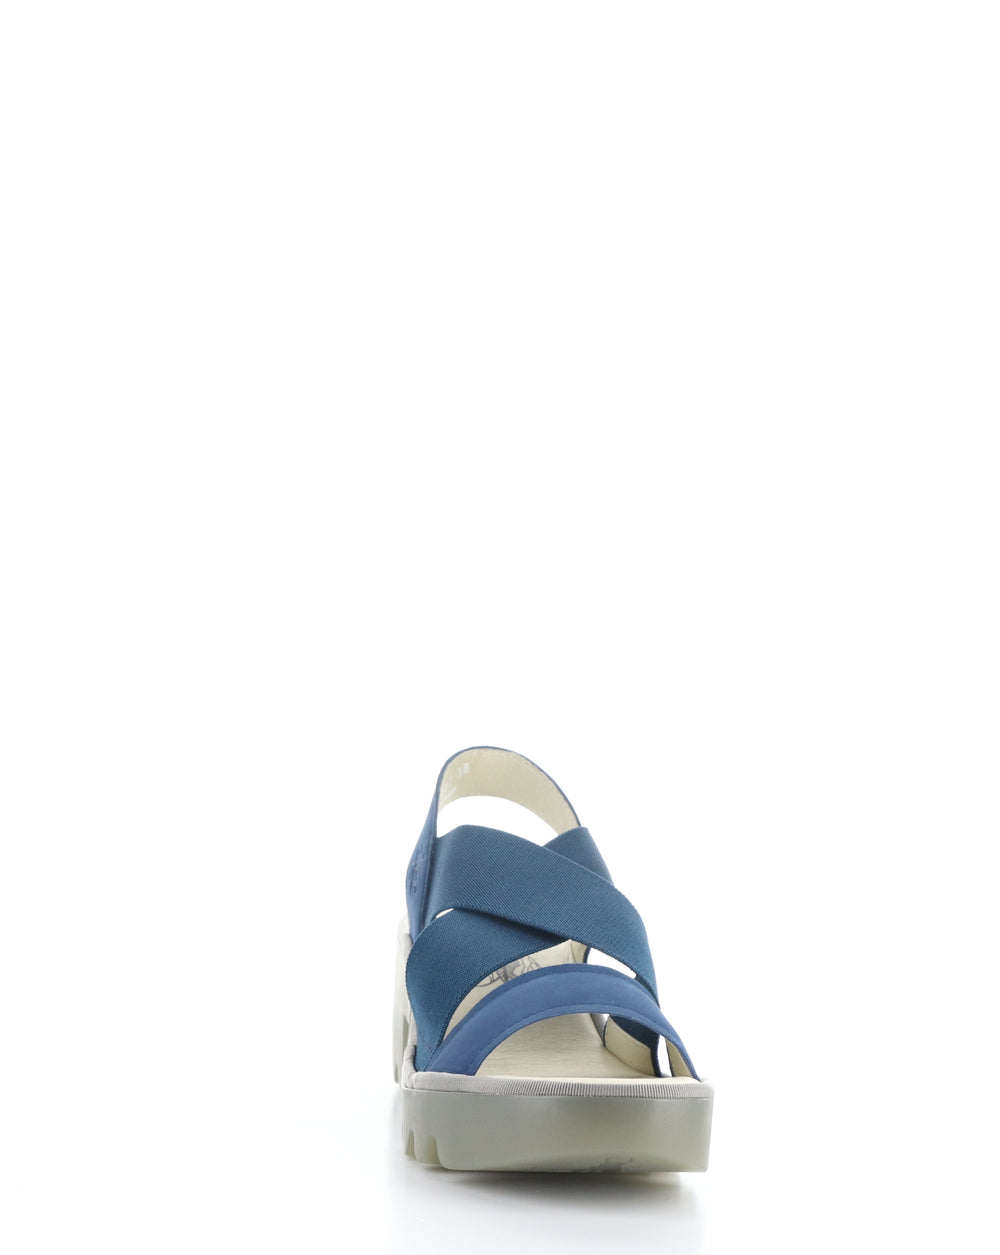 TAJI502FLY 002 BLUE Round Toe Sandals